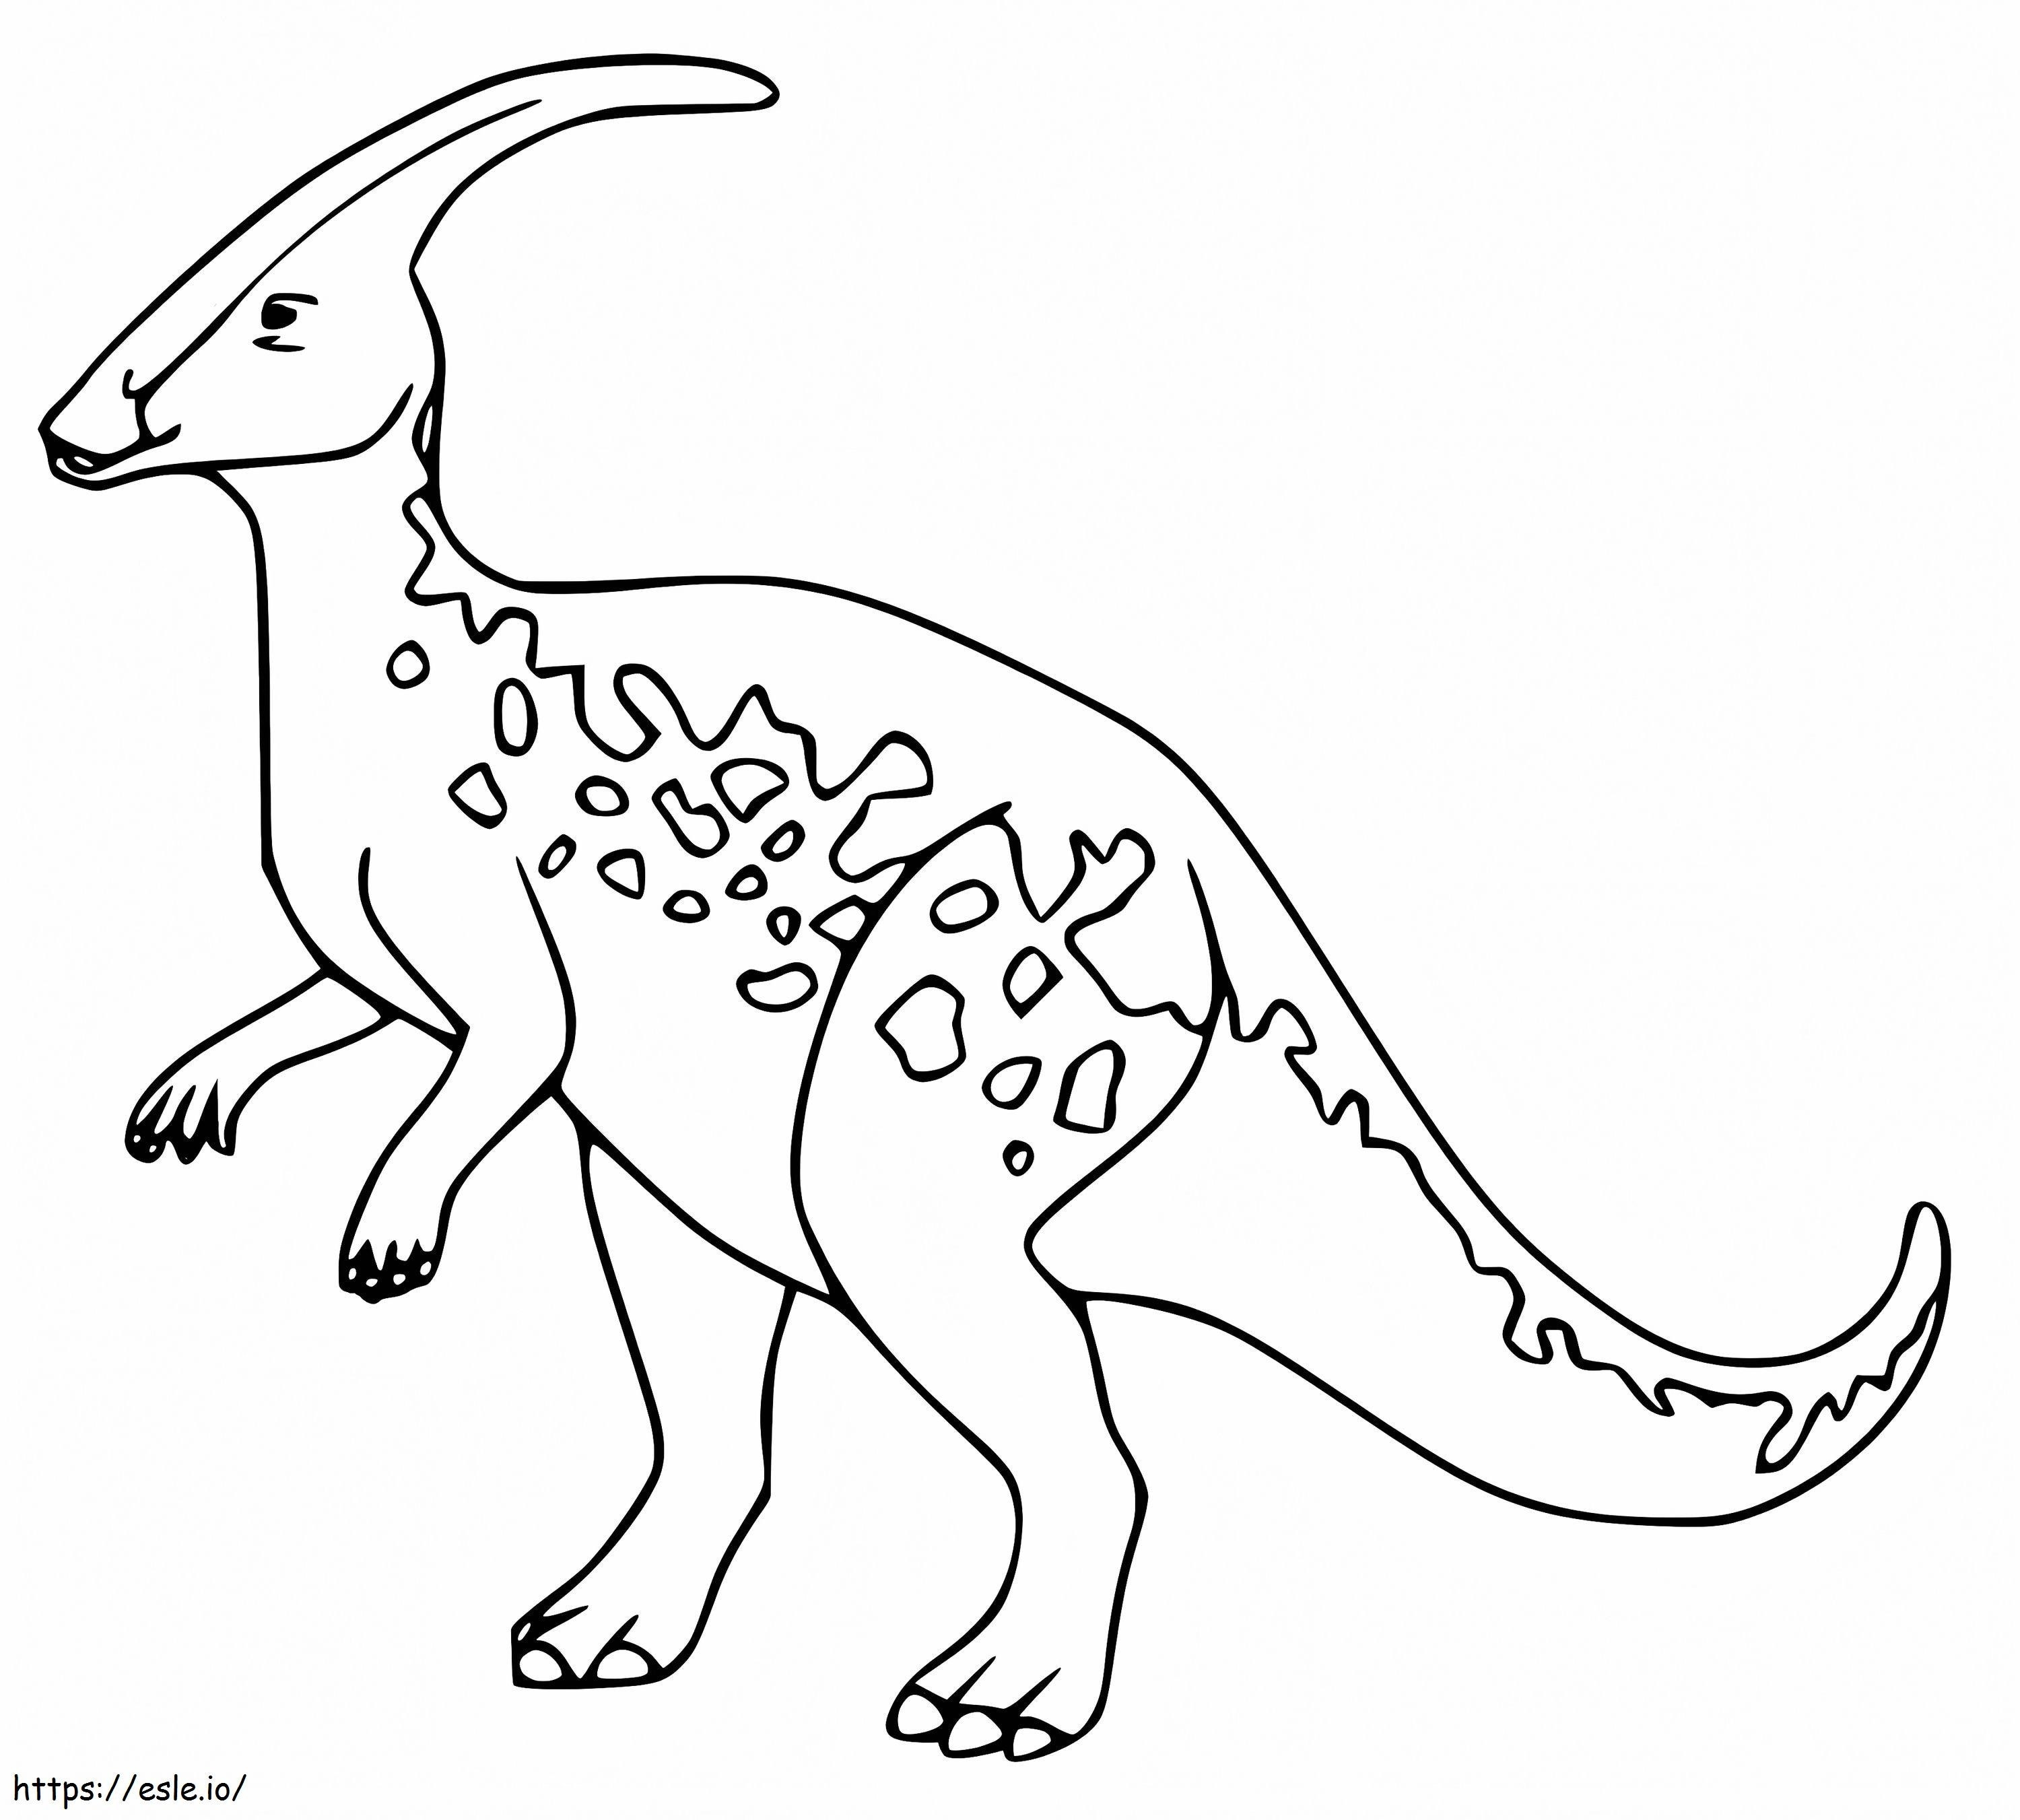 Parasaurolophus 4 ausmalbilder